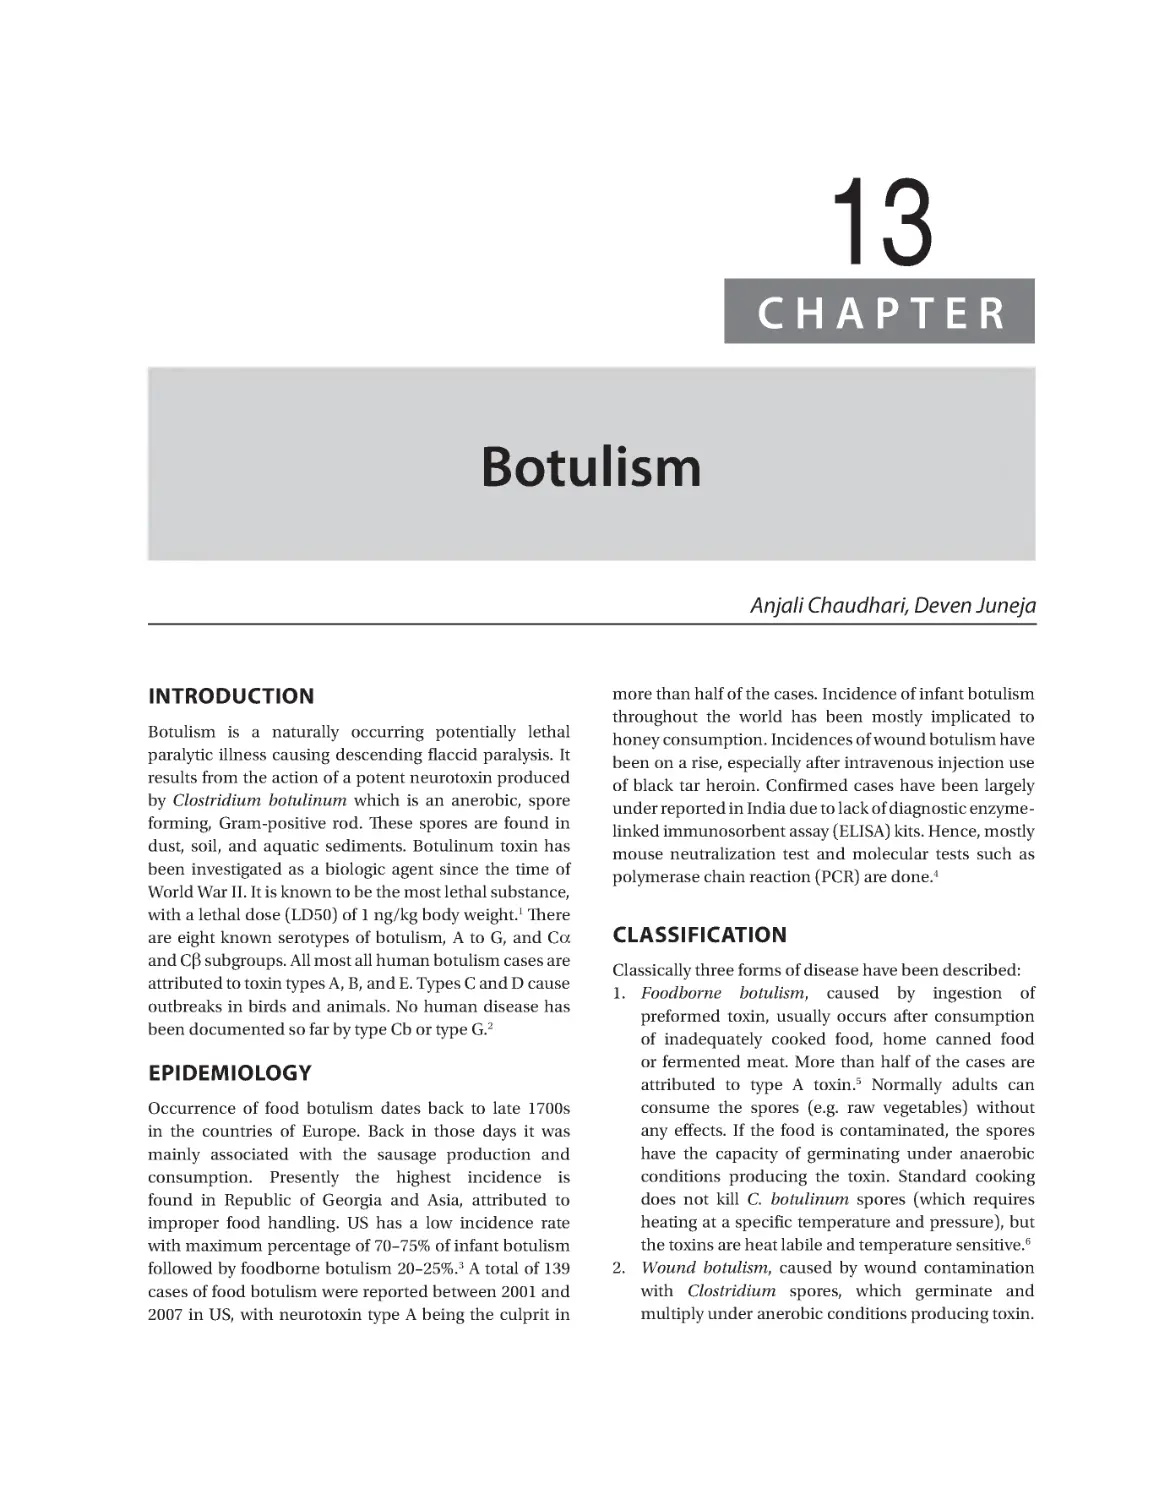 Chapter 13: Botulism